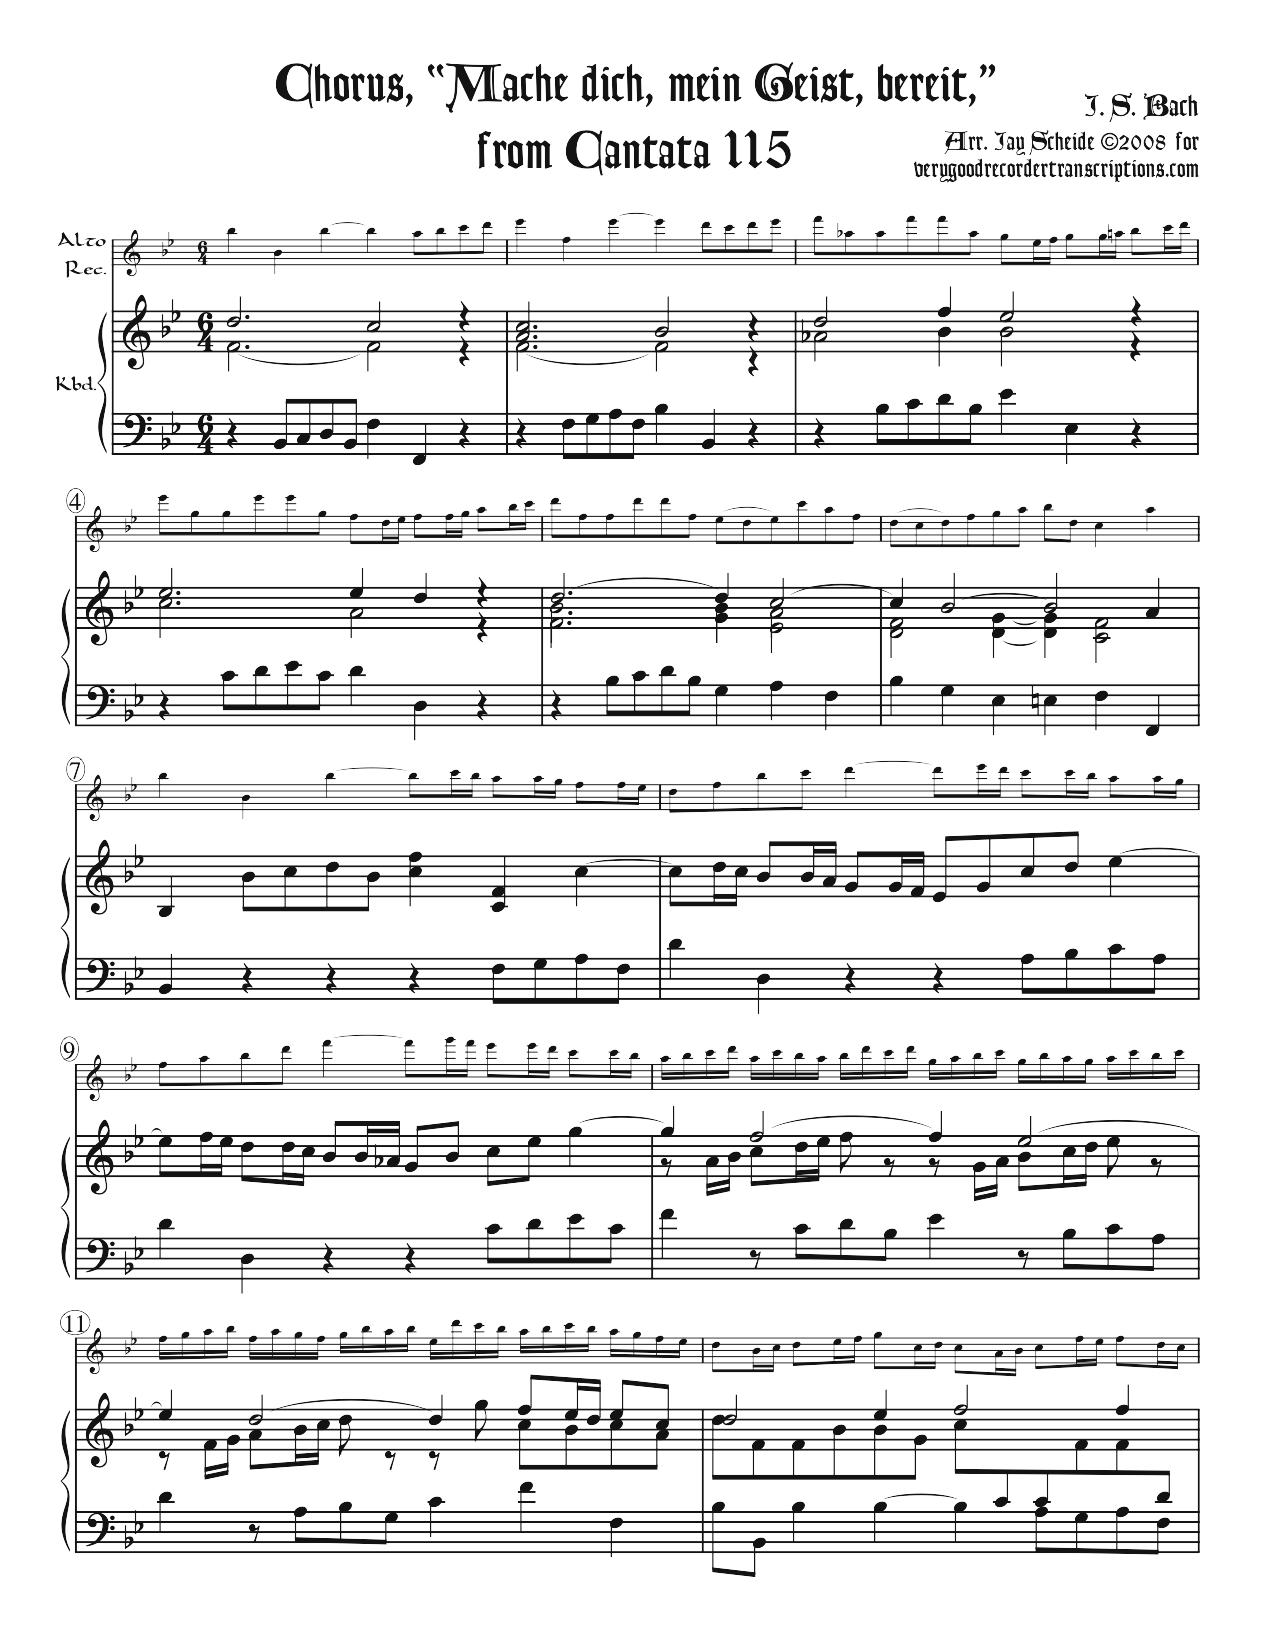 Opening chorus, “Mache dich, mein Geist, bereit,” from Cantata 115